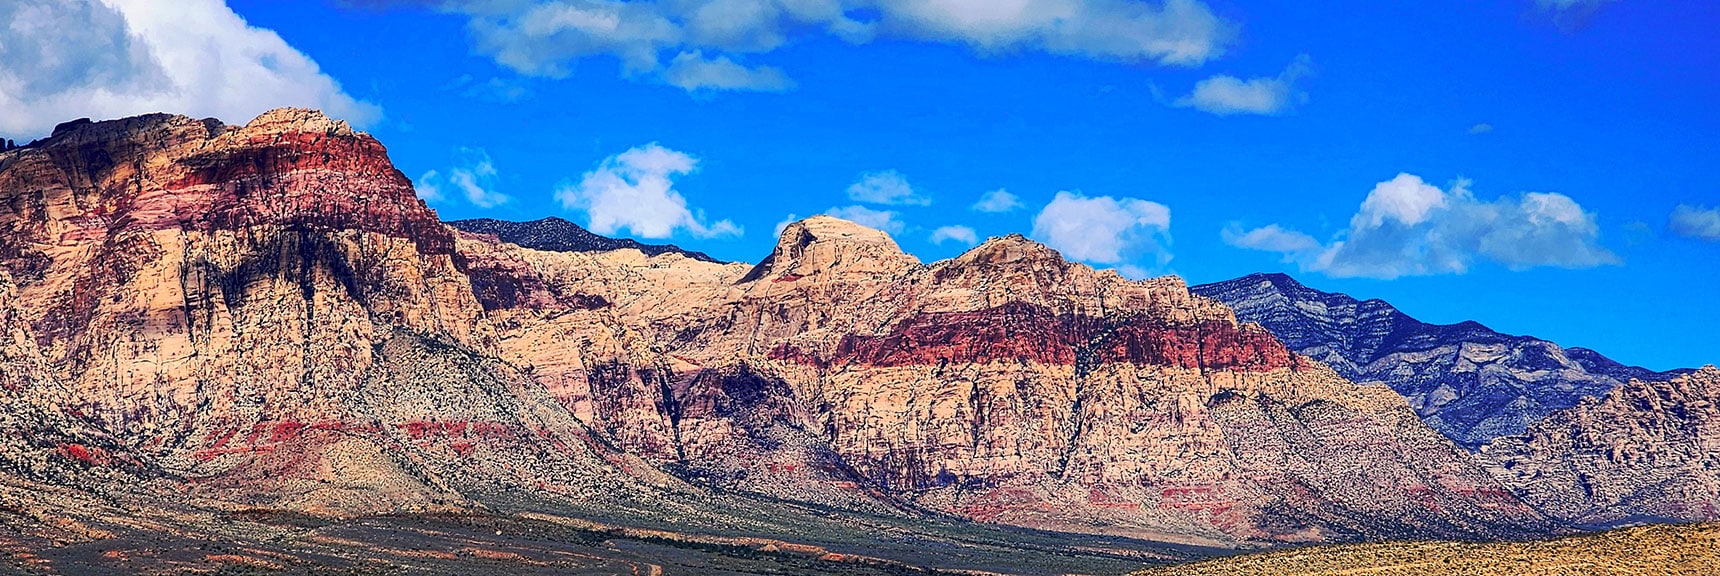 Right to Left: Bridge Mt., Juniper Peak, Rainbow Mountain. | Western High Ridge | Blue Diamond Hill, Nevada